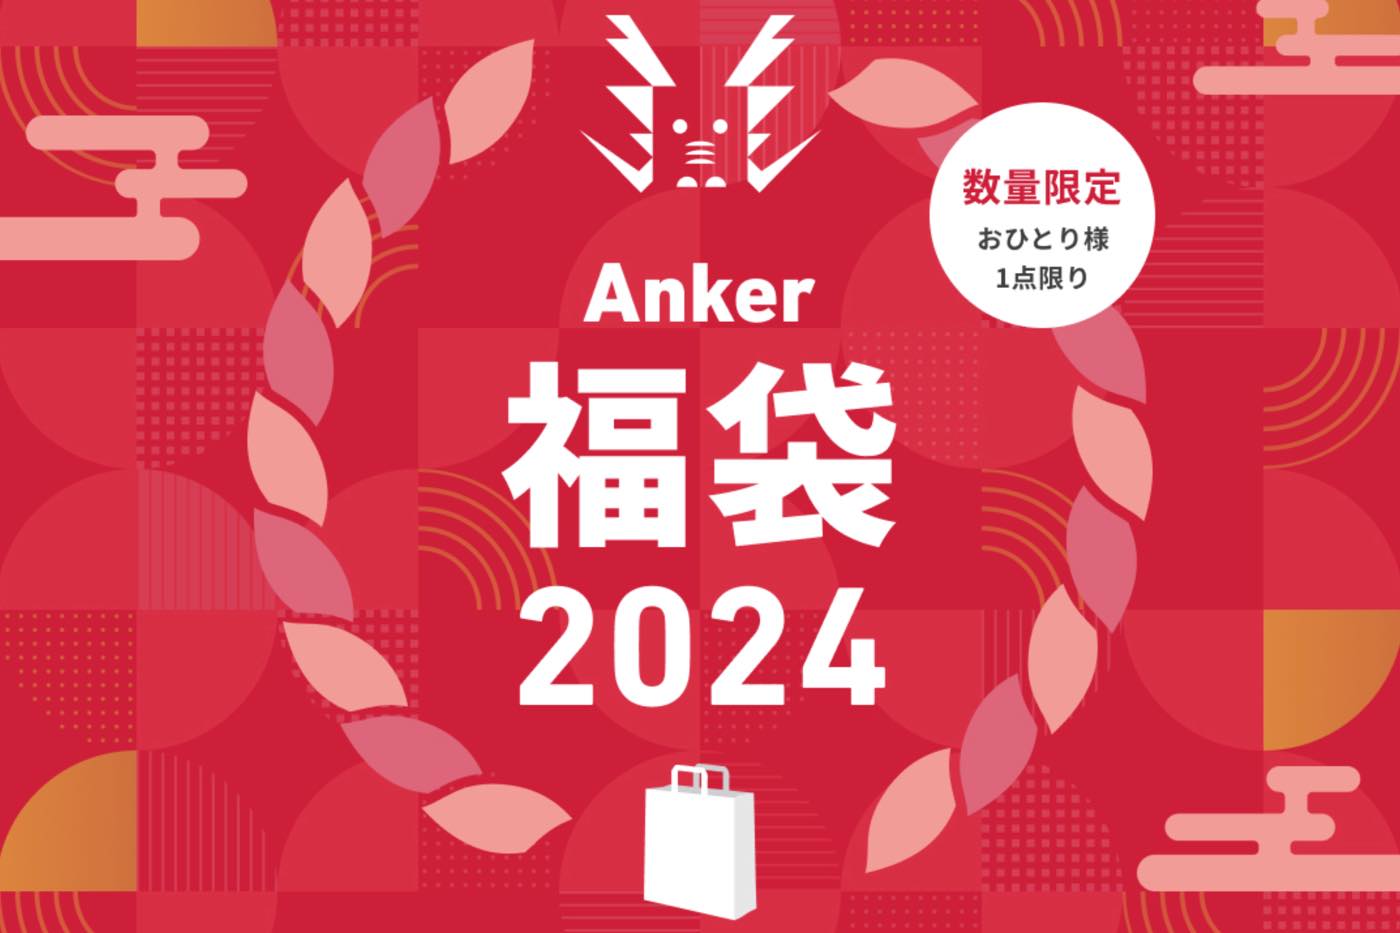 Anker Store、2024年初売りからオリジナル福袋「Anker Happy Bag」を販売へ ｰ 一部店舗では整理券を配布